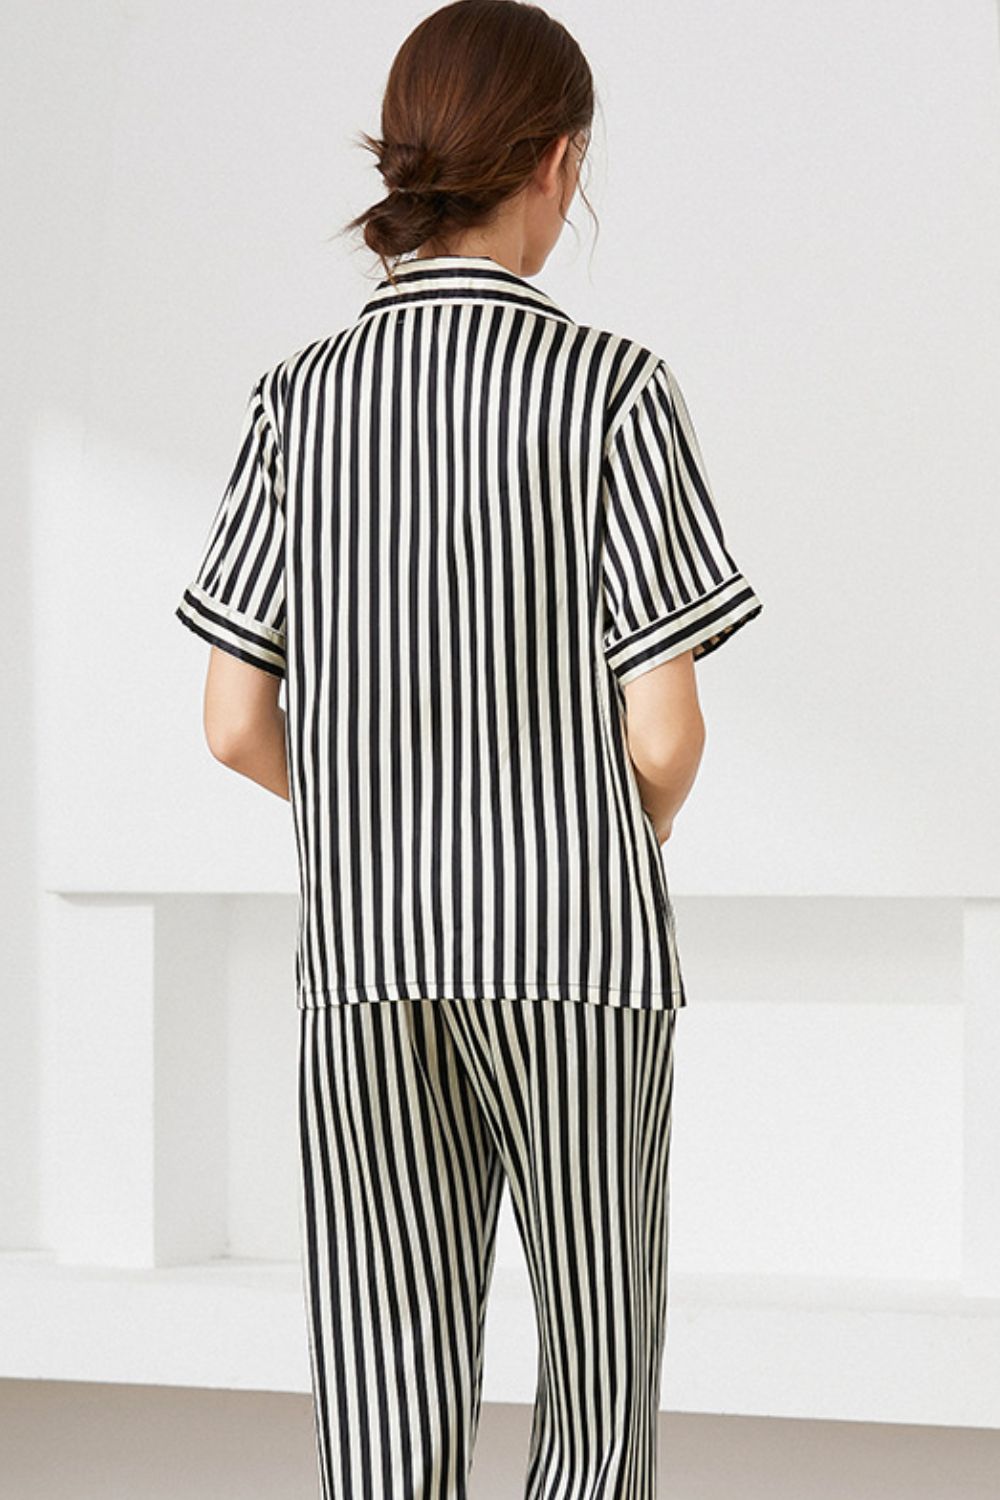 Women’s Striped Short Sleeve Shirt, Pants, and Cami Pajama Set